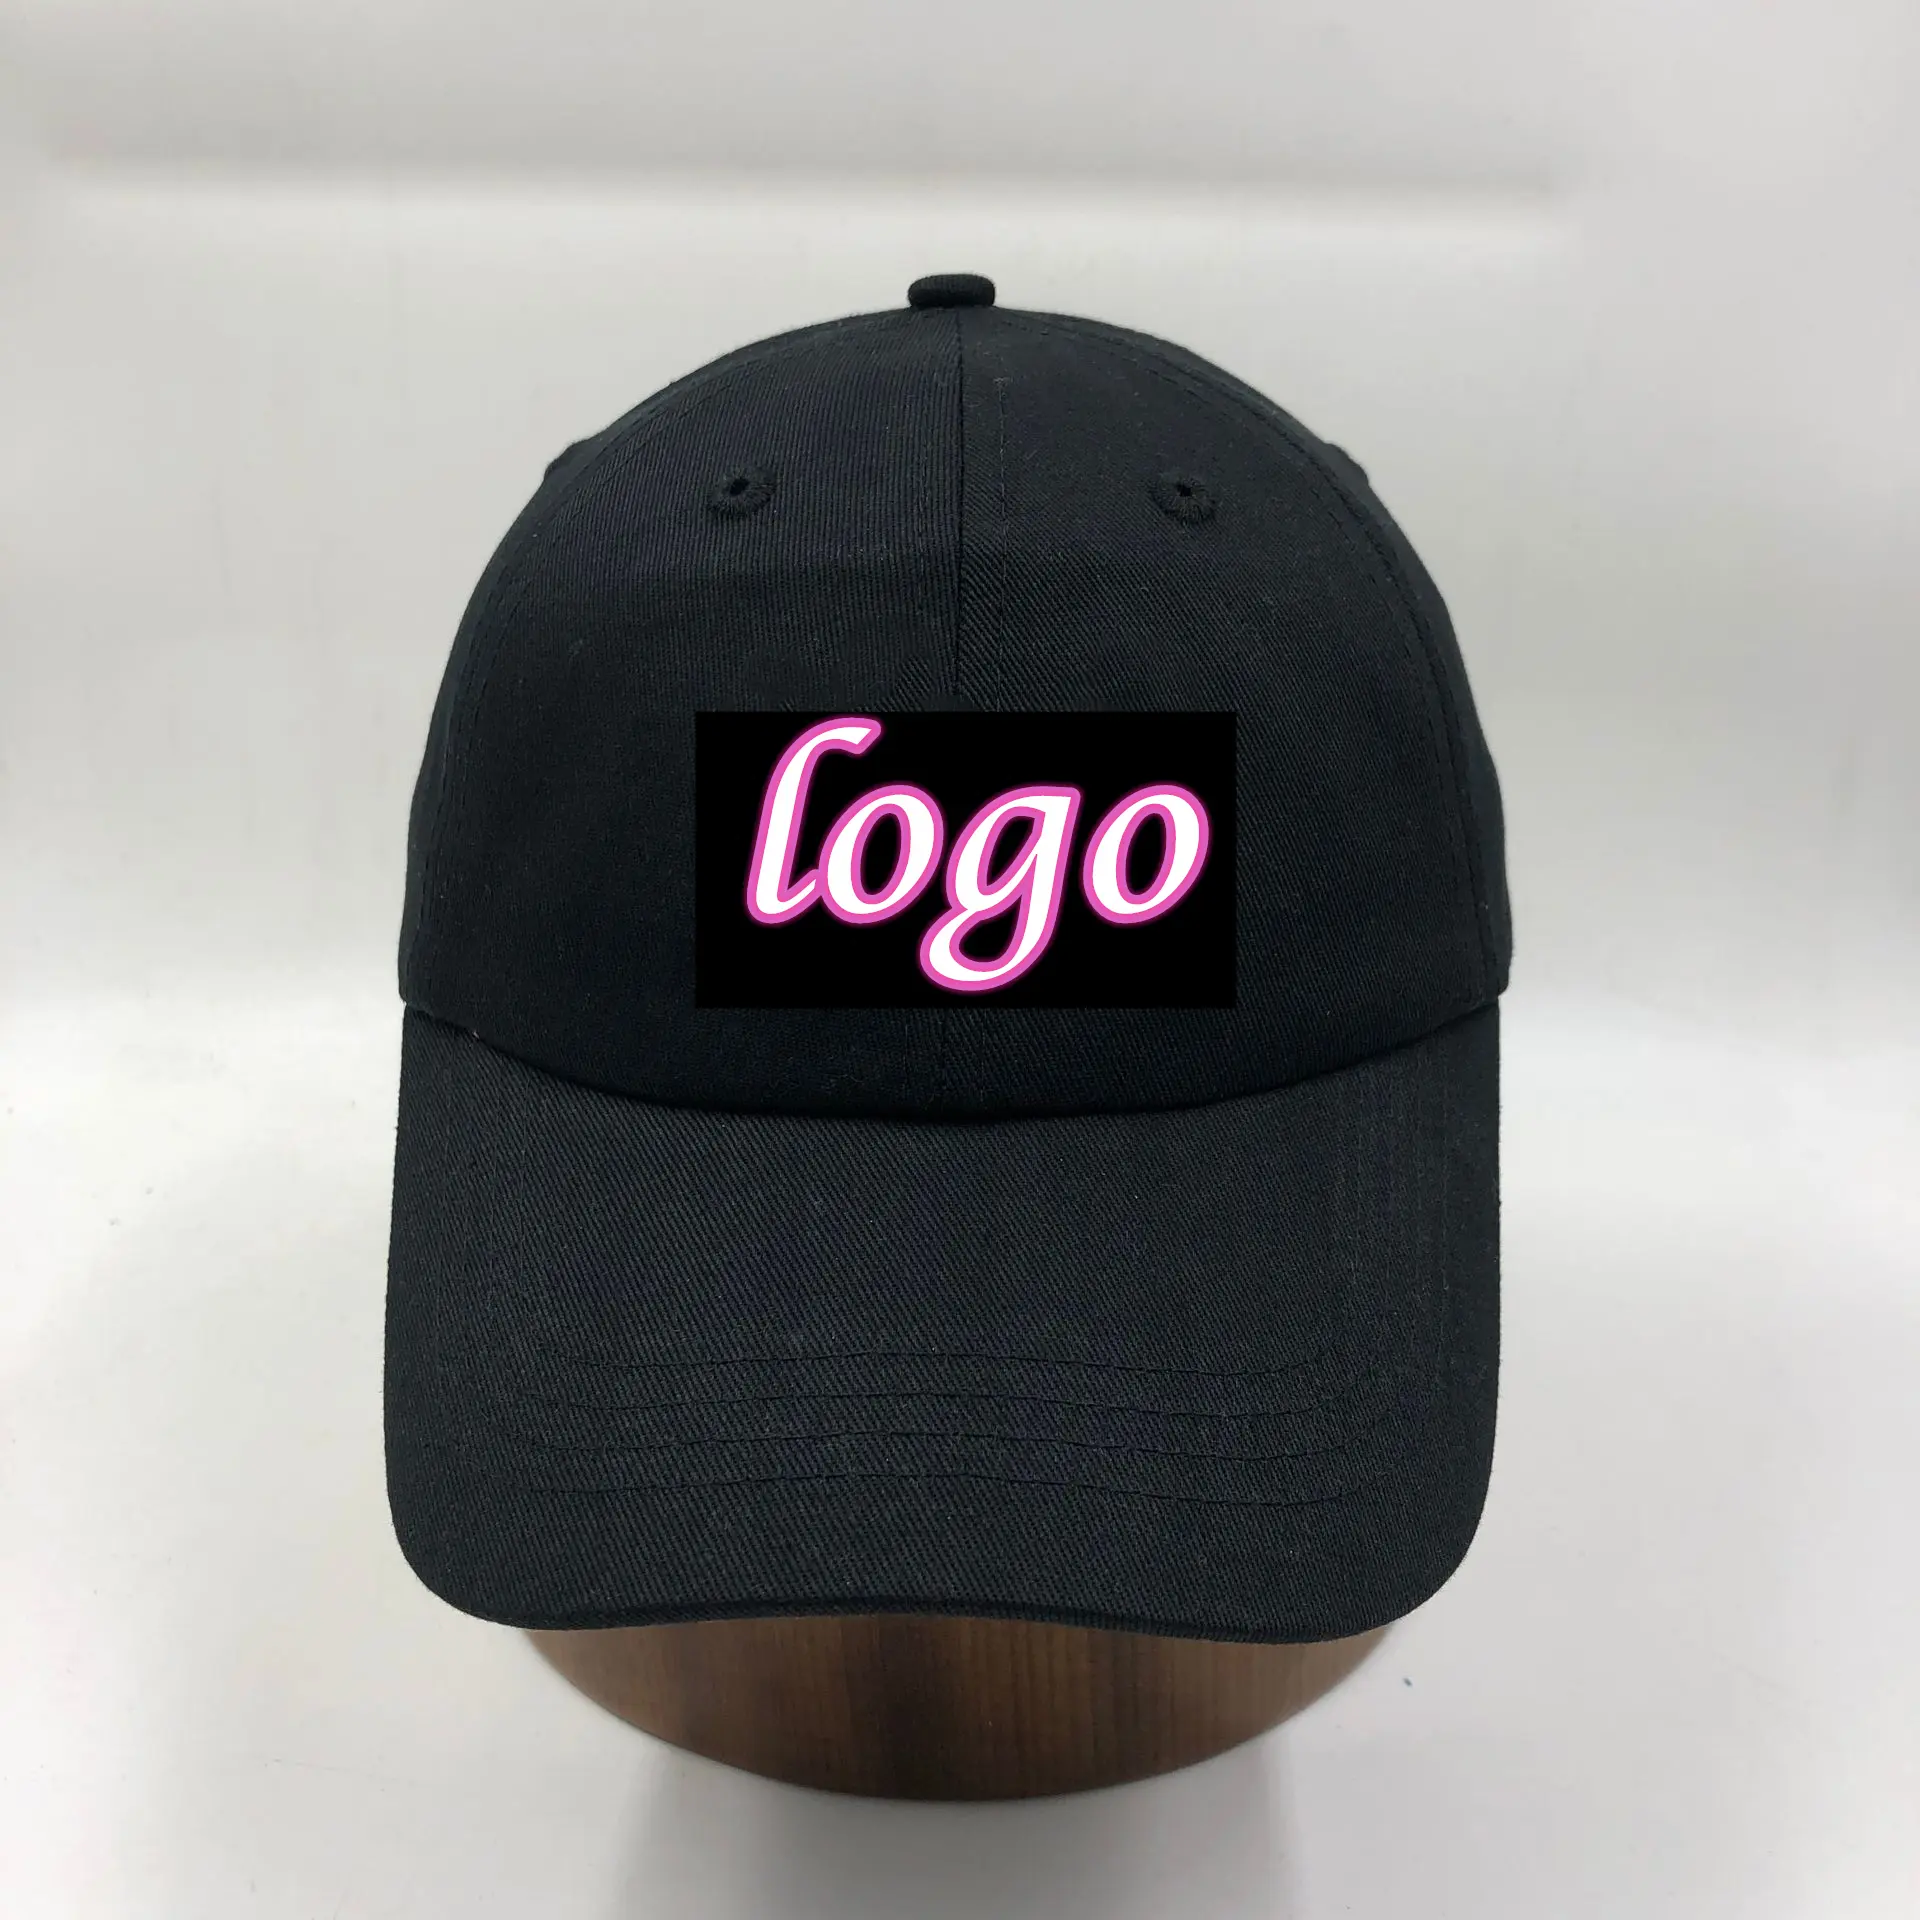 New Arrival Amazing Led Light Caps , Luminous Cap Custom With Your Own Logo